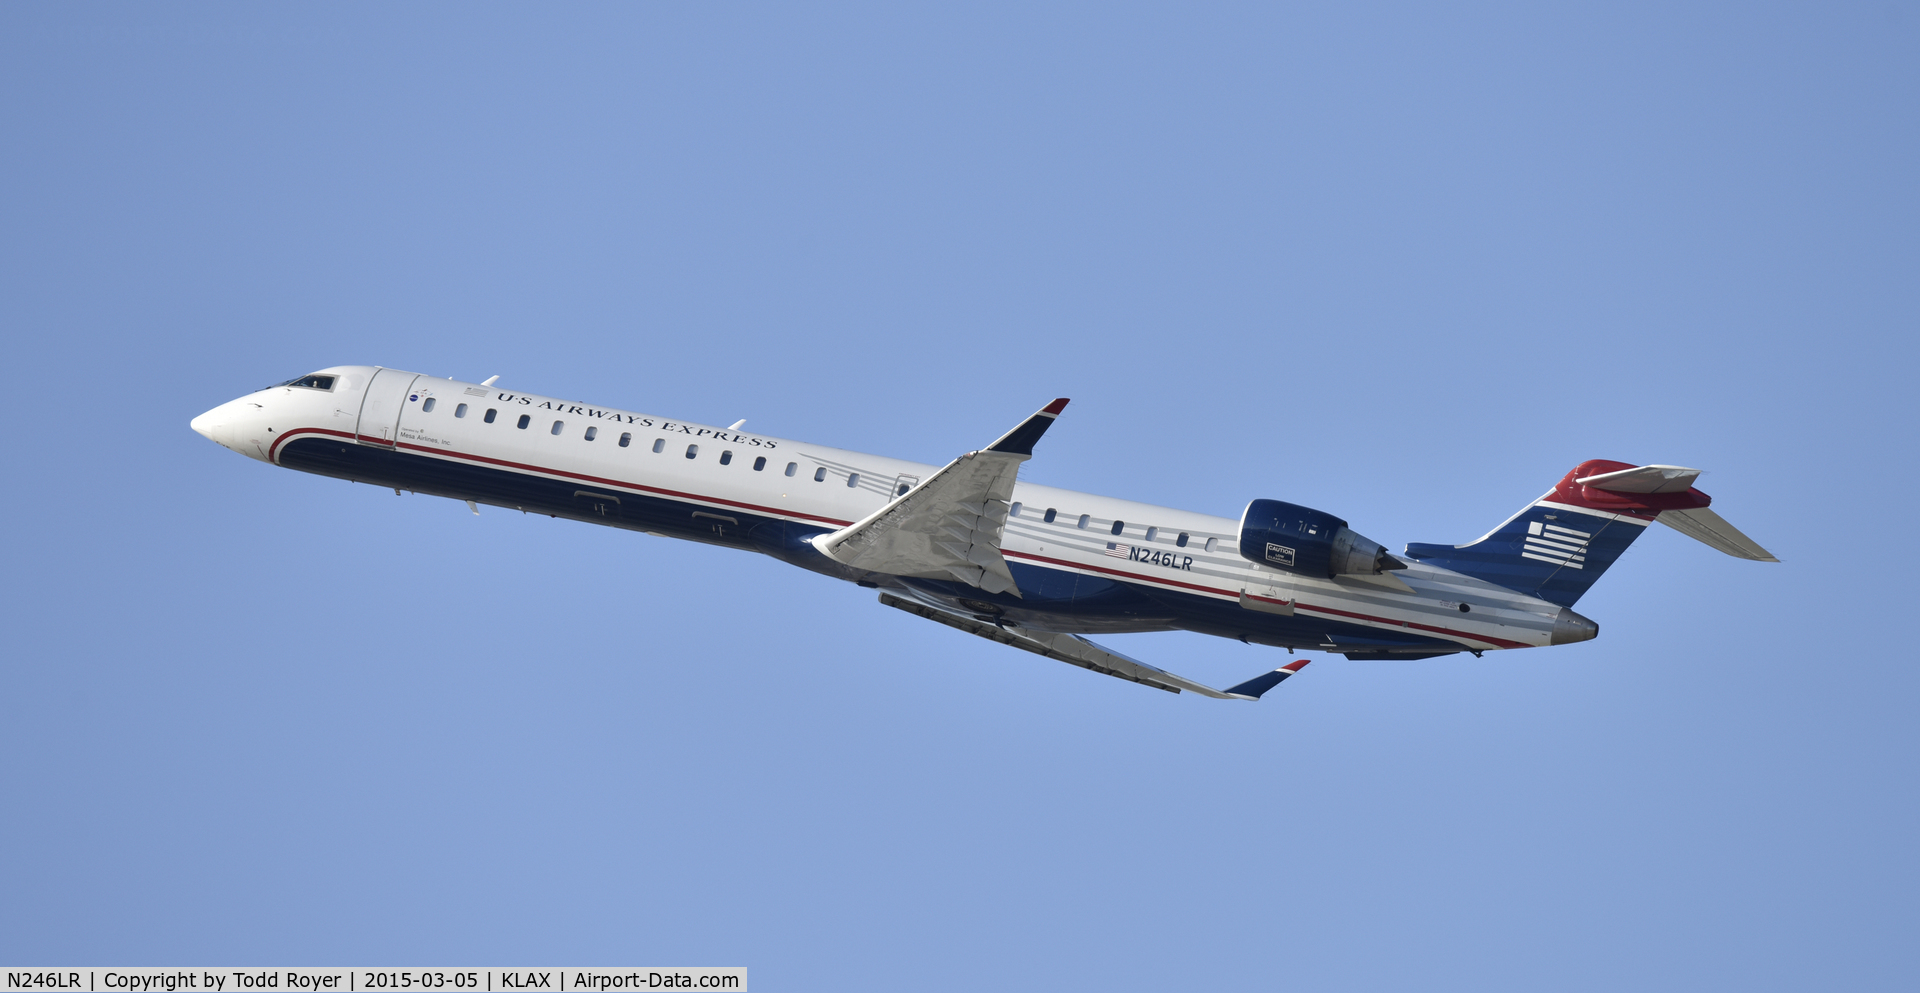 N246LR, 2009 Bombardier CRJ-900LR (CL-600-2D24) C/N 15239, Departing LAX on 25R